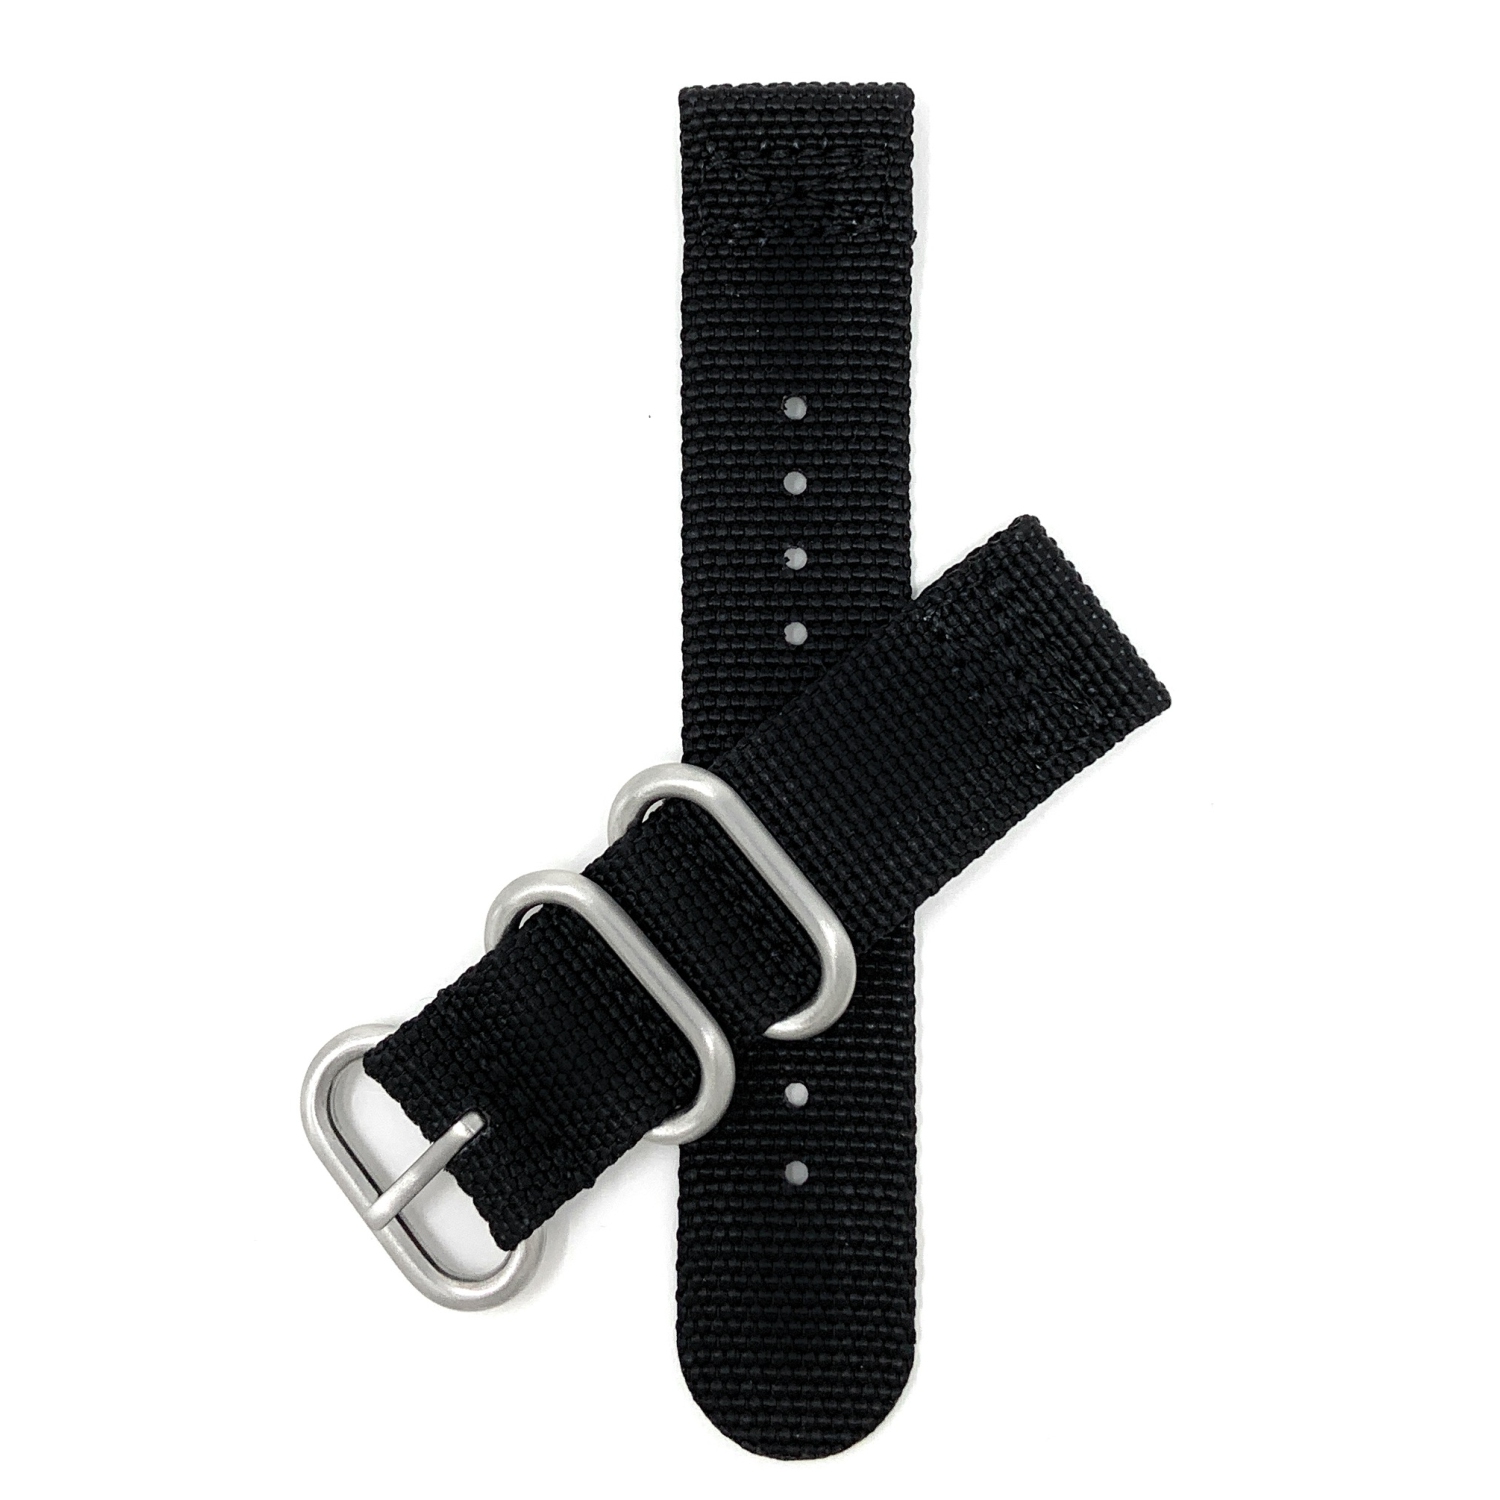 Bandini 2 Piece Nylon Zulu Smart Watch Band Strap For Oneplus Watch - 22mm, Black